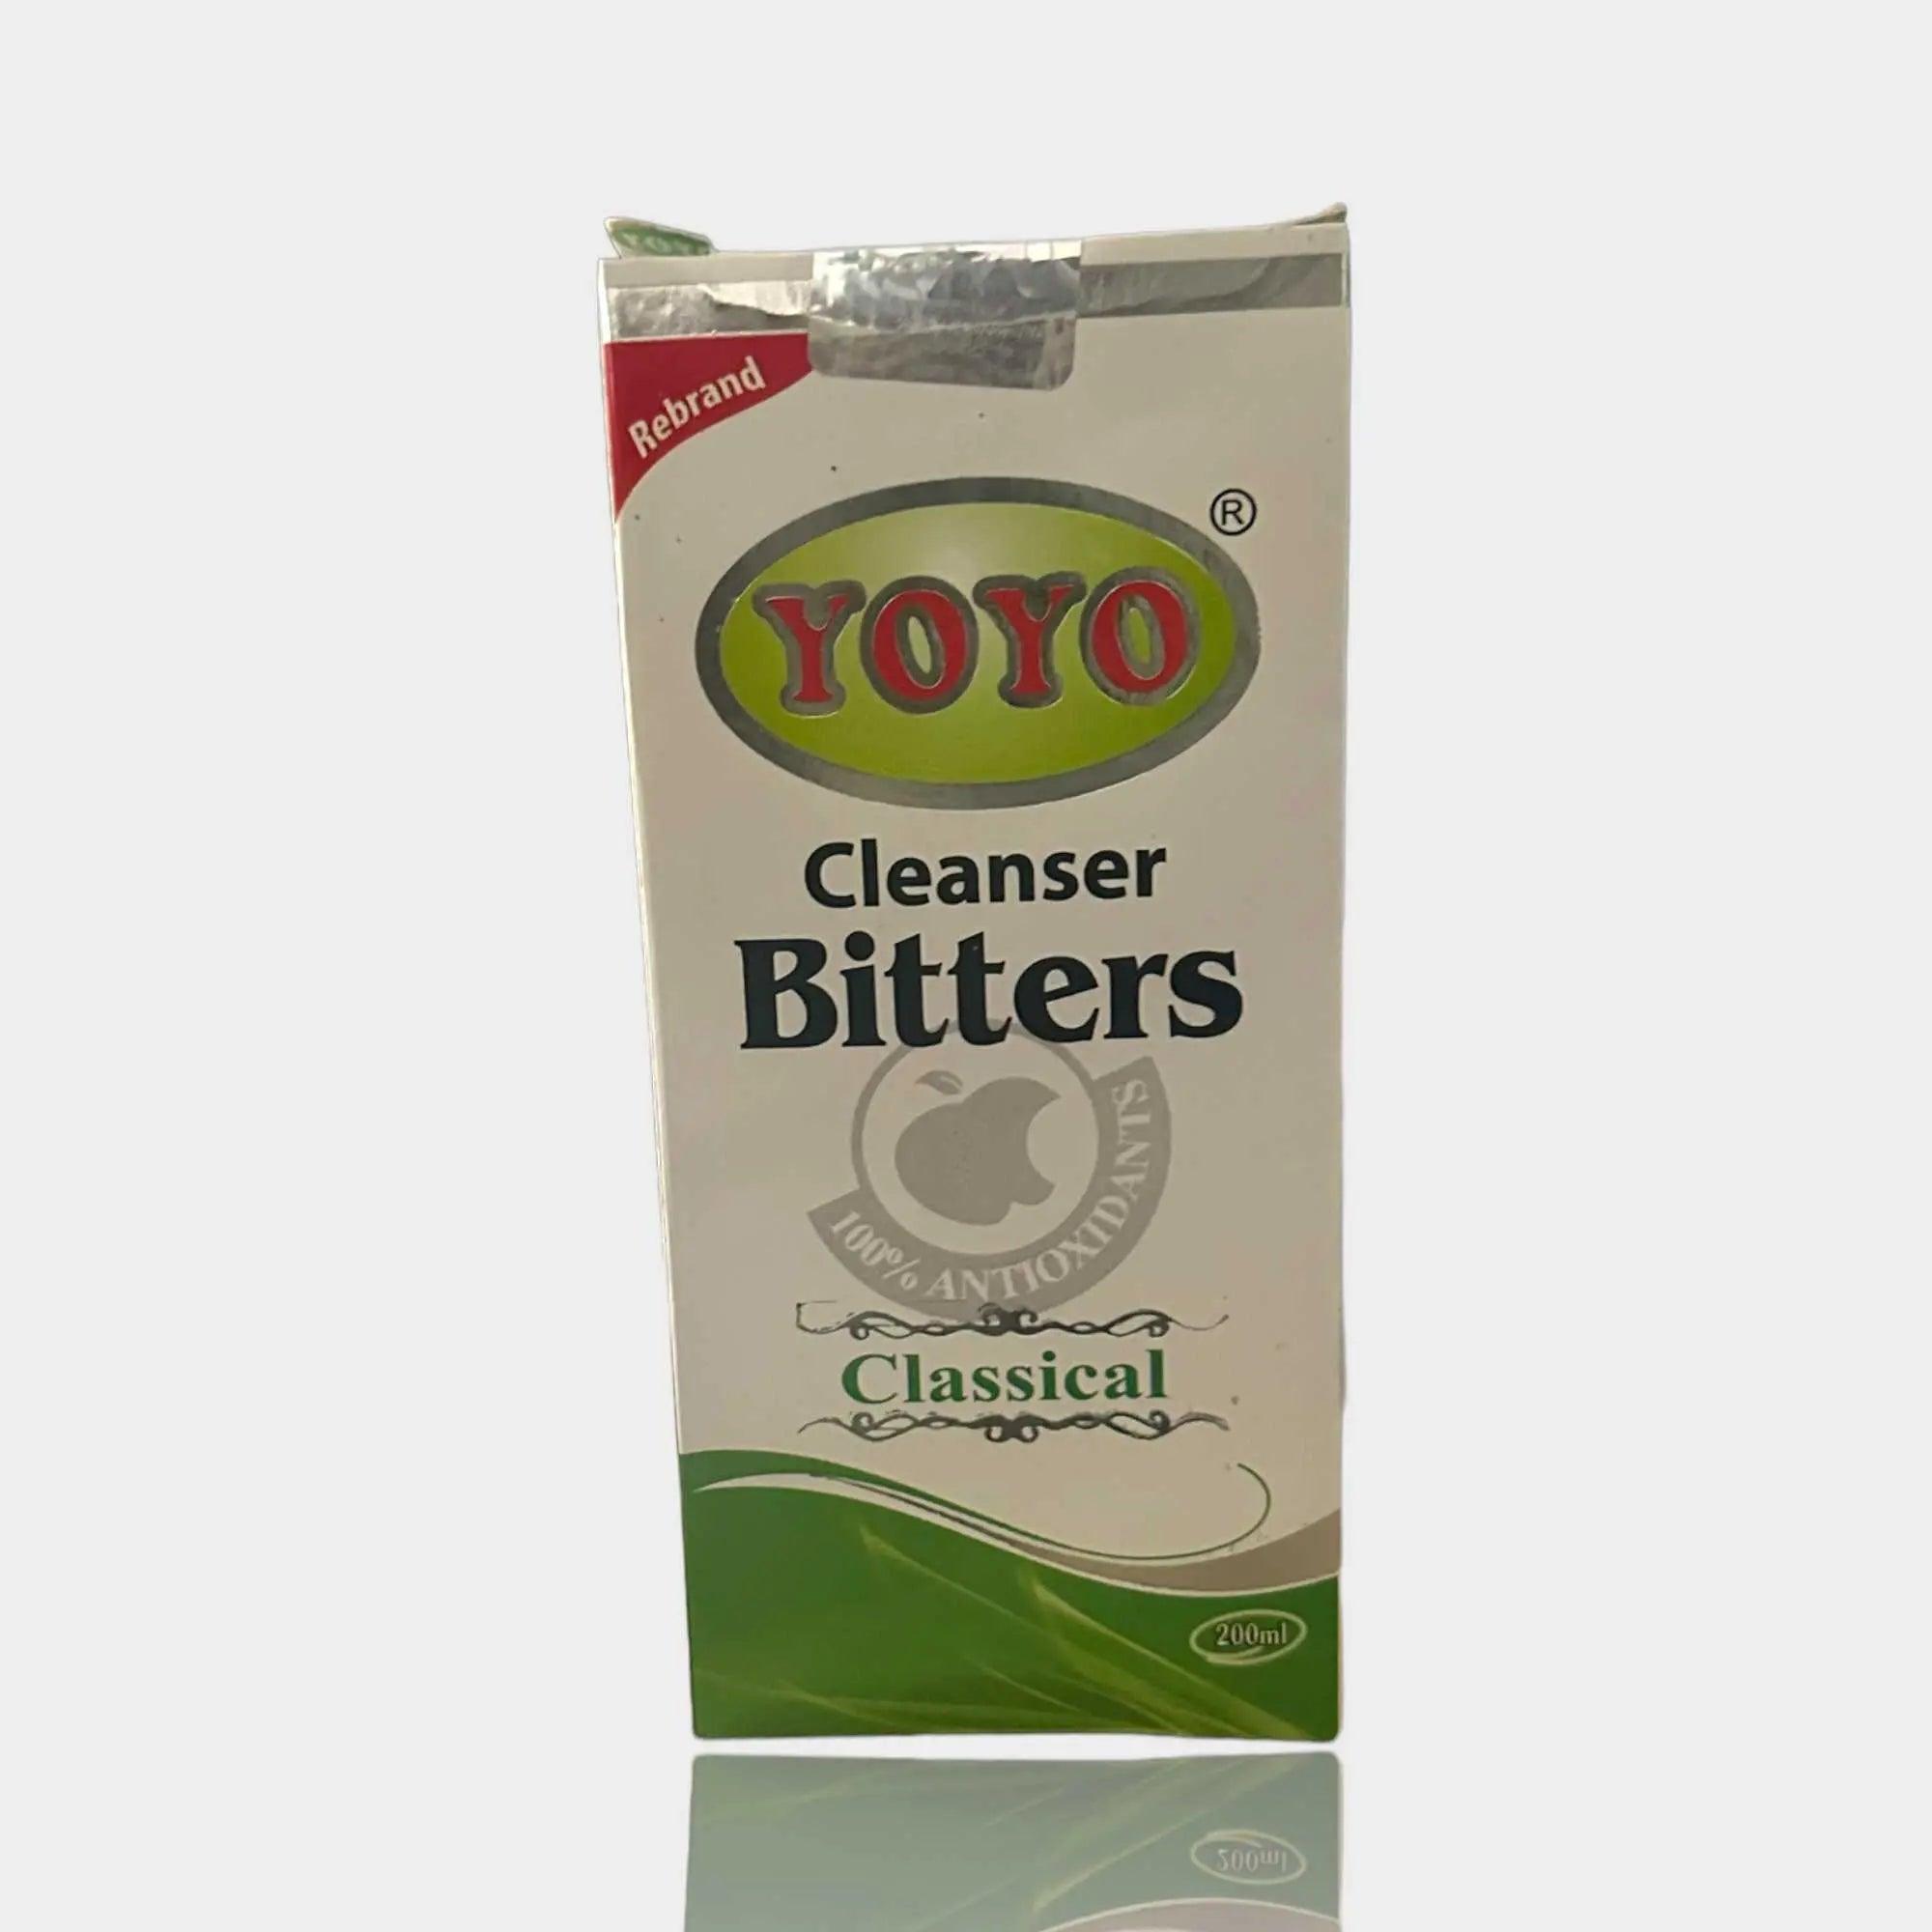 YOYO Cleanser Bitters Classical - Honesty Sales U.K